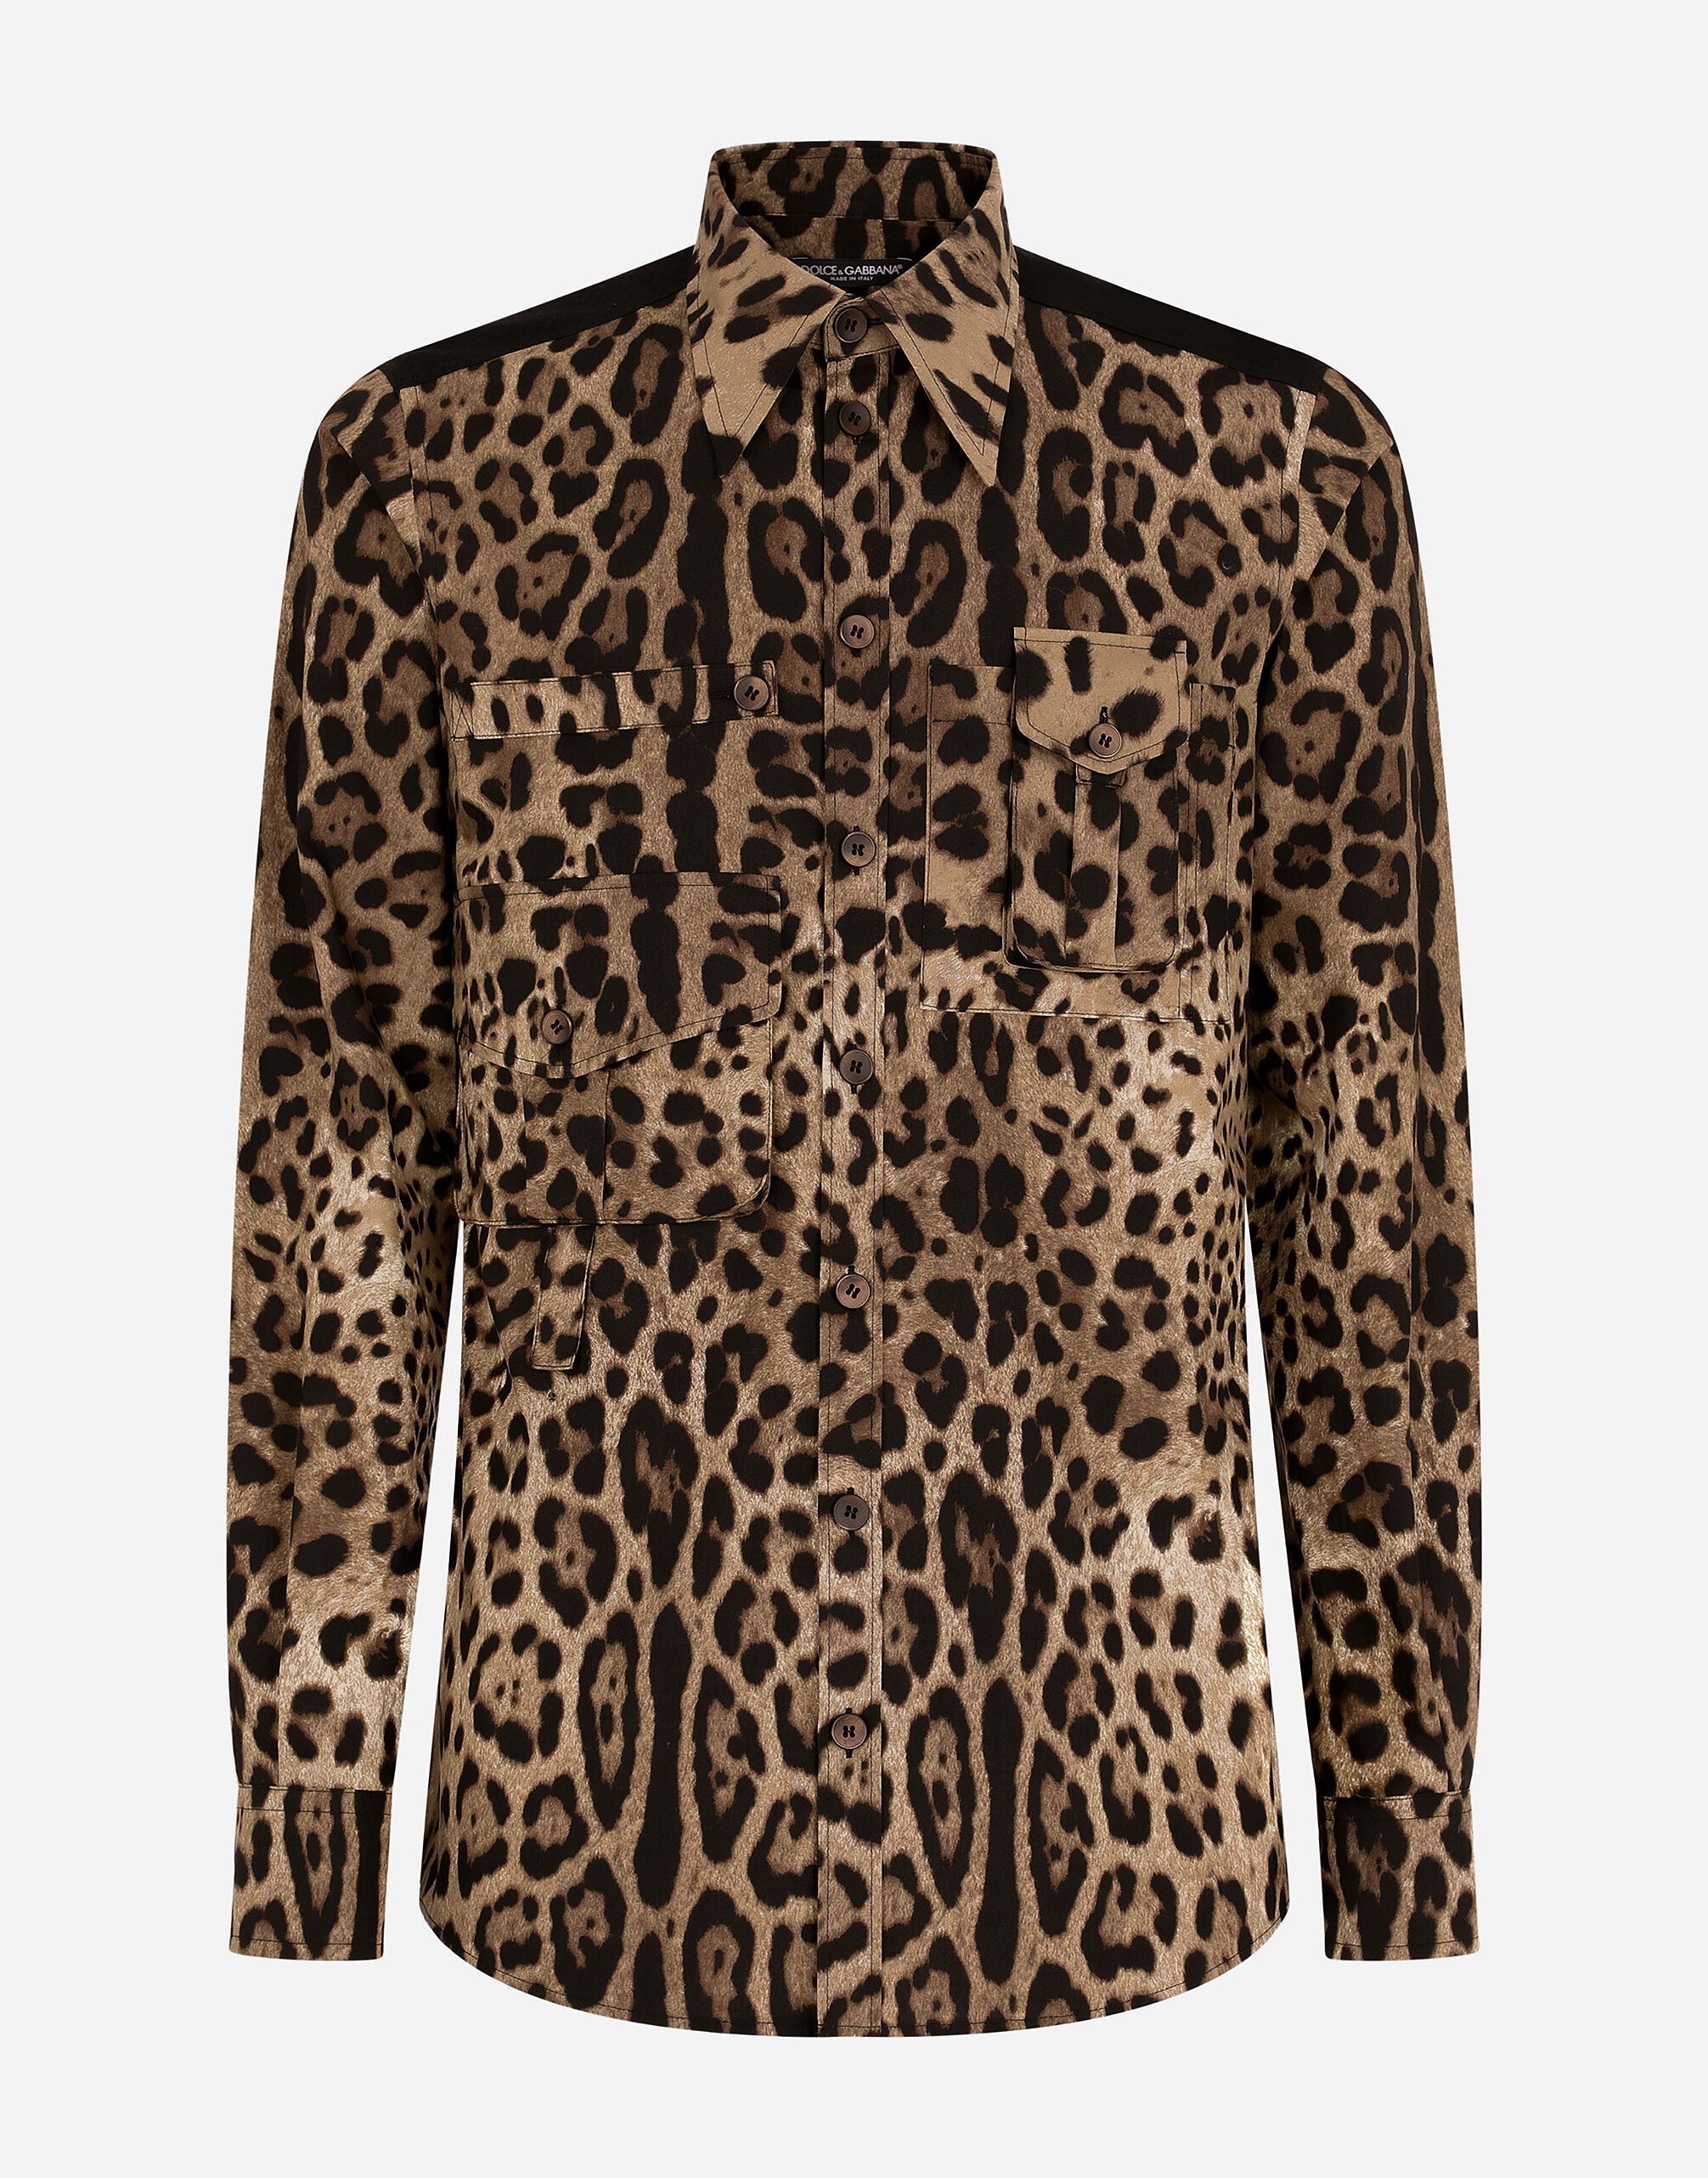 Dolce&Gabbana Leopard-print cotton shirt with multiple pockets Black GY6IETFUFJR